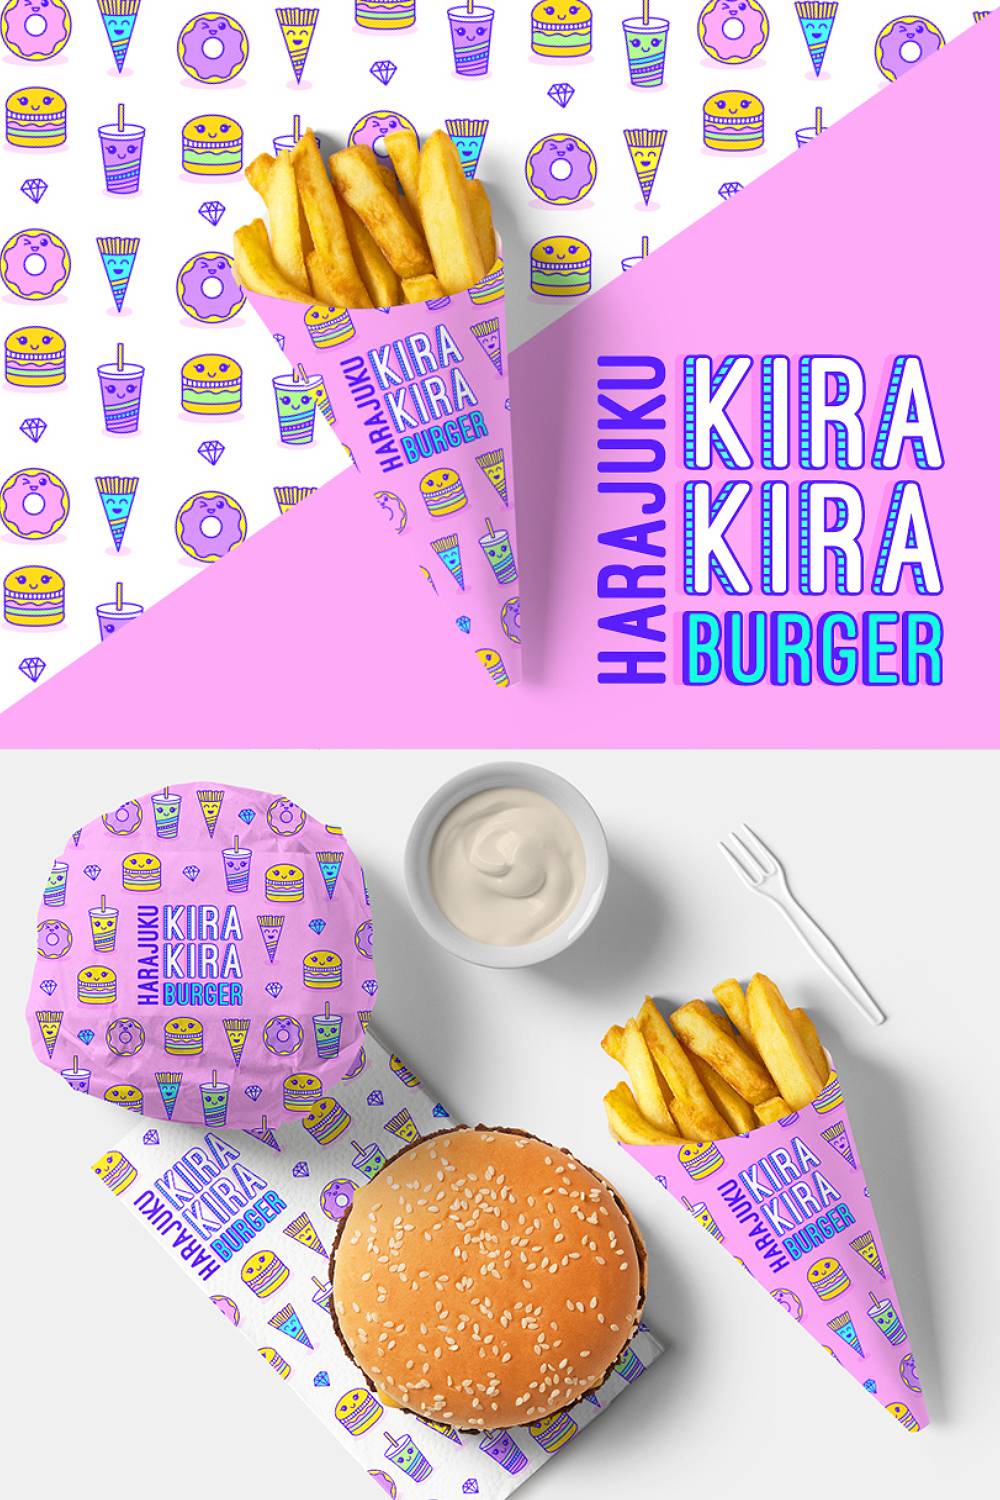 fast food packaging design ideas 